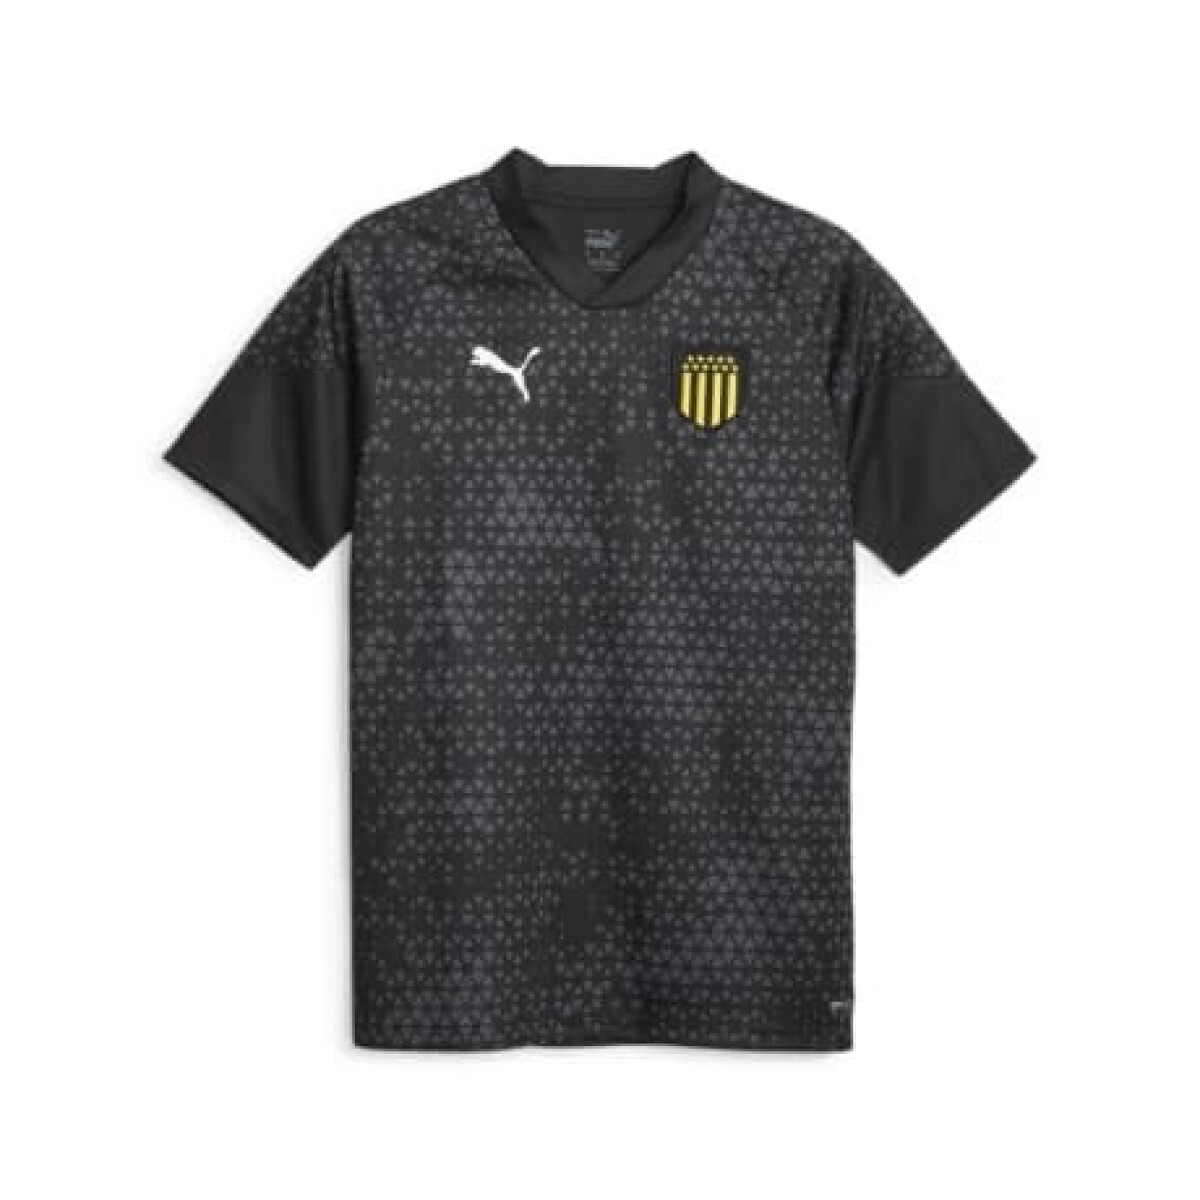 Camiseta Puma Peñarol Hombre Cap Train Jersey Negro - S/C 